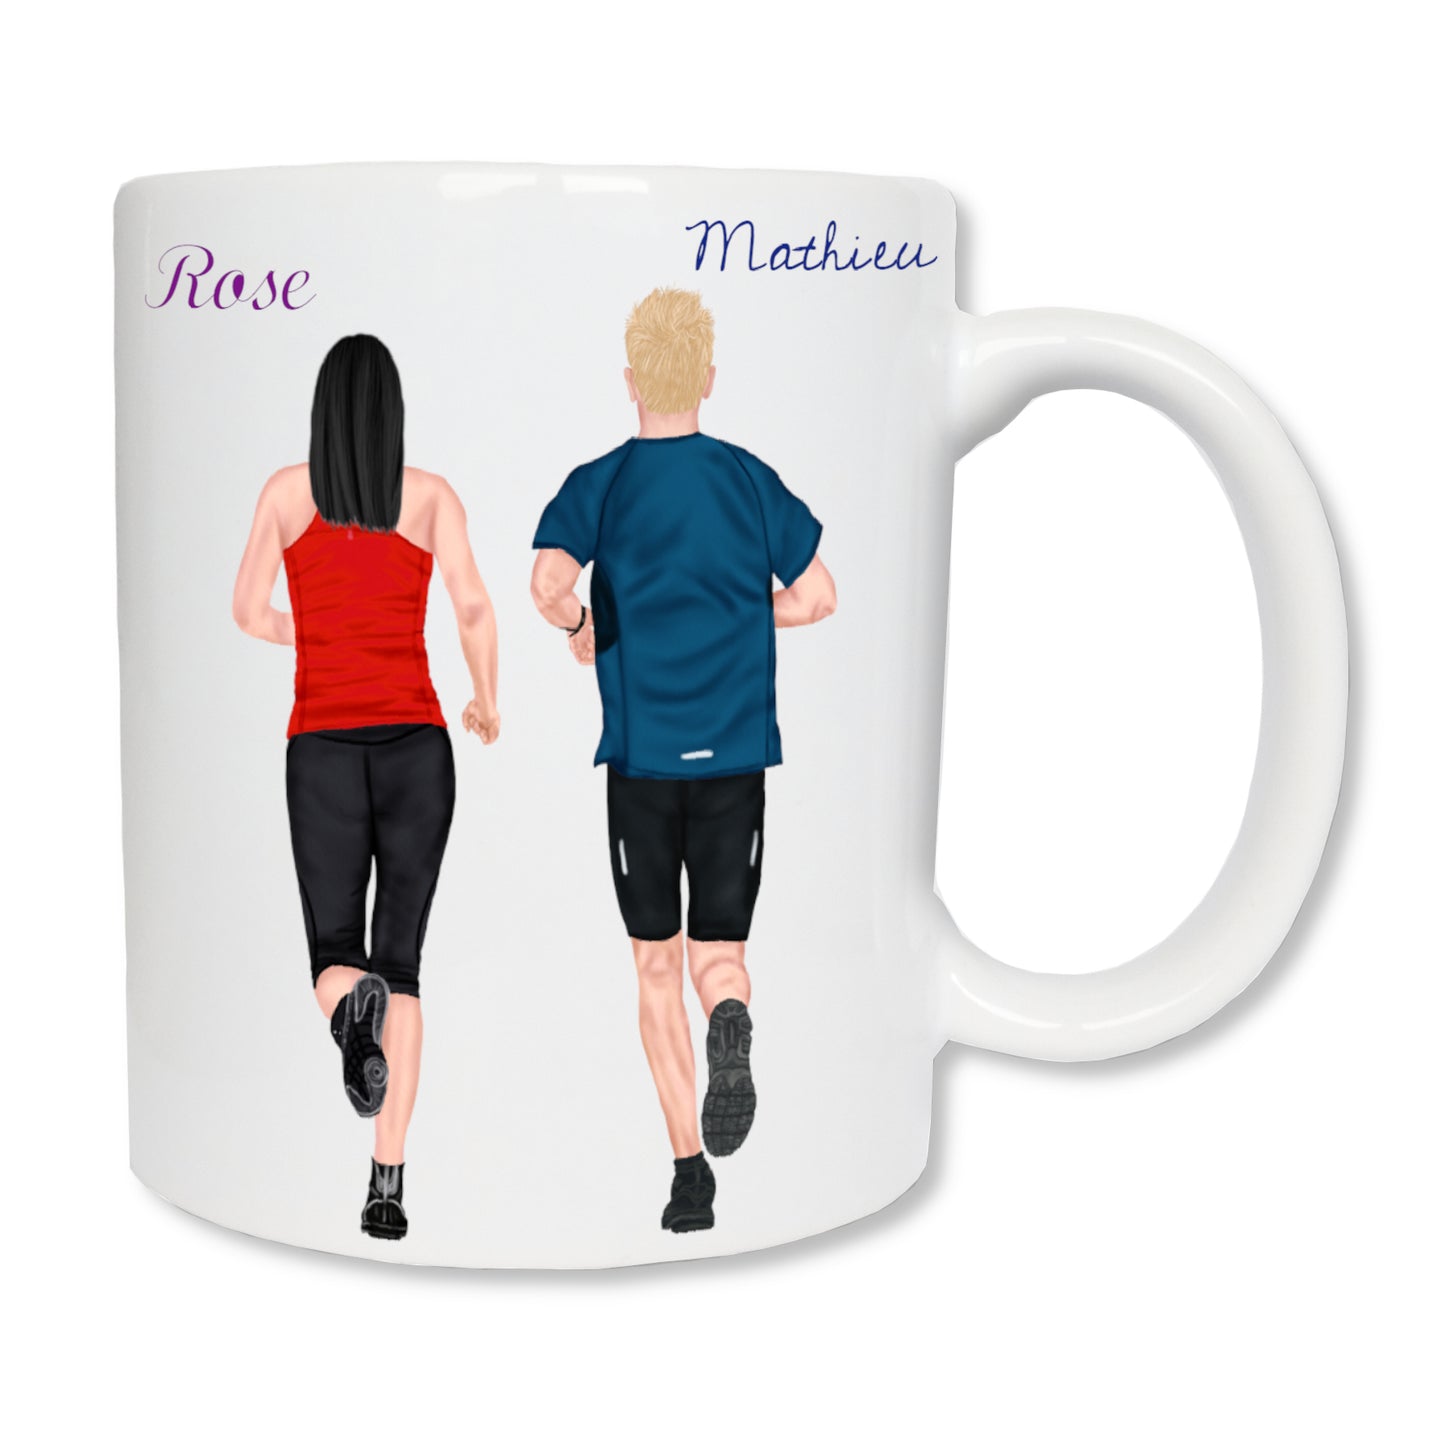 Personalized mug 2 joggers